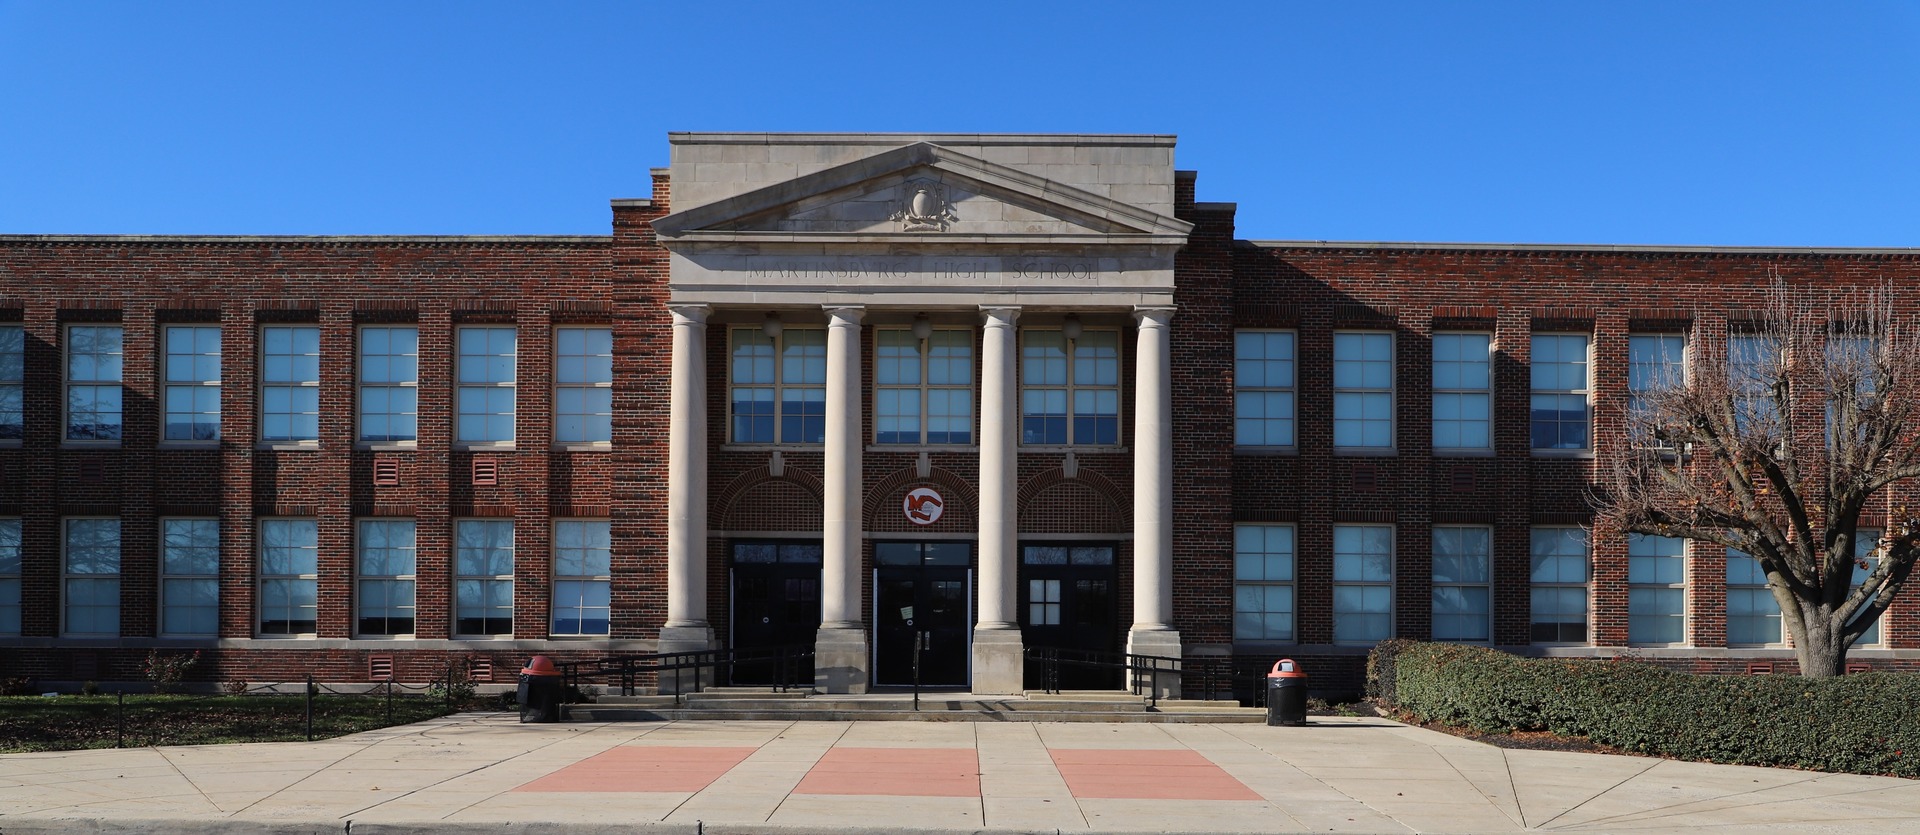 image of martinsburg high school